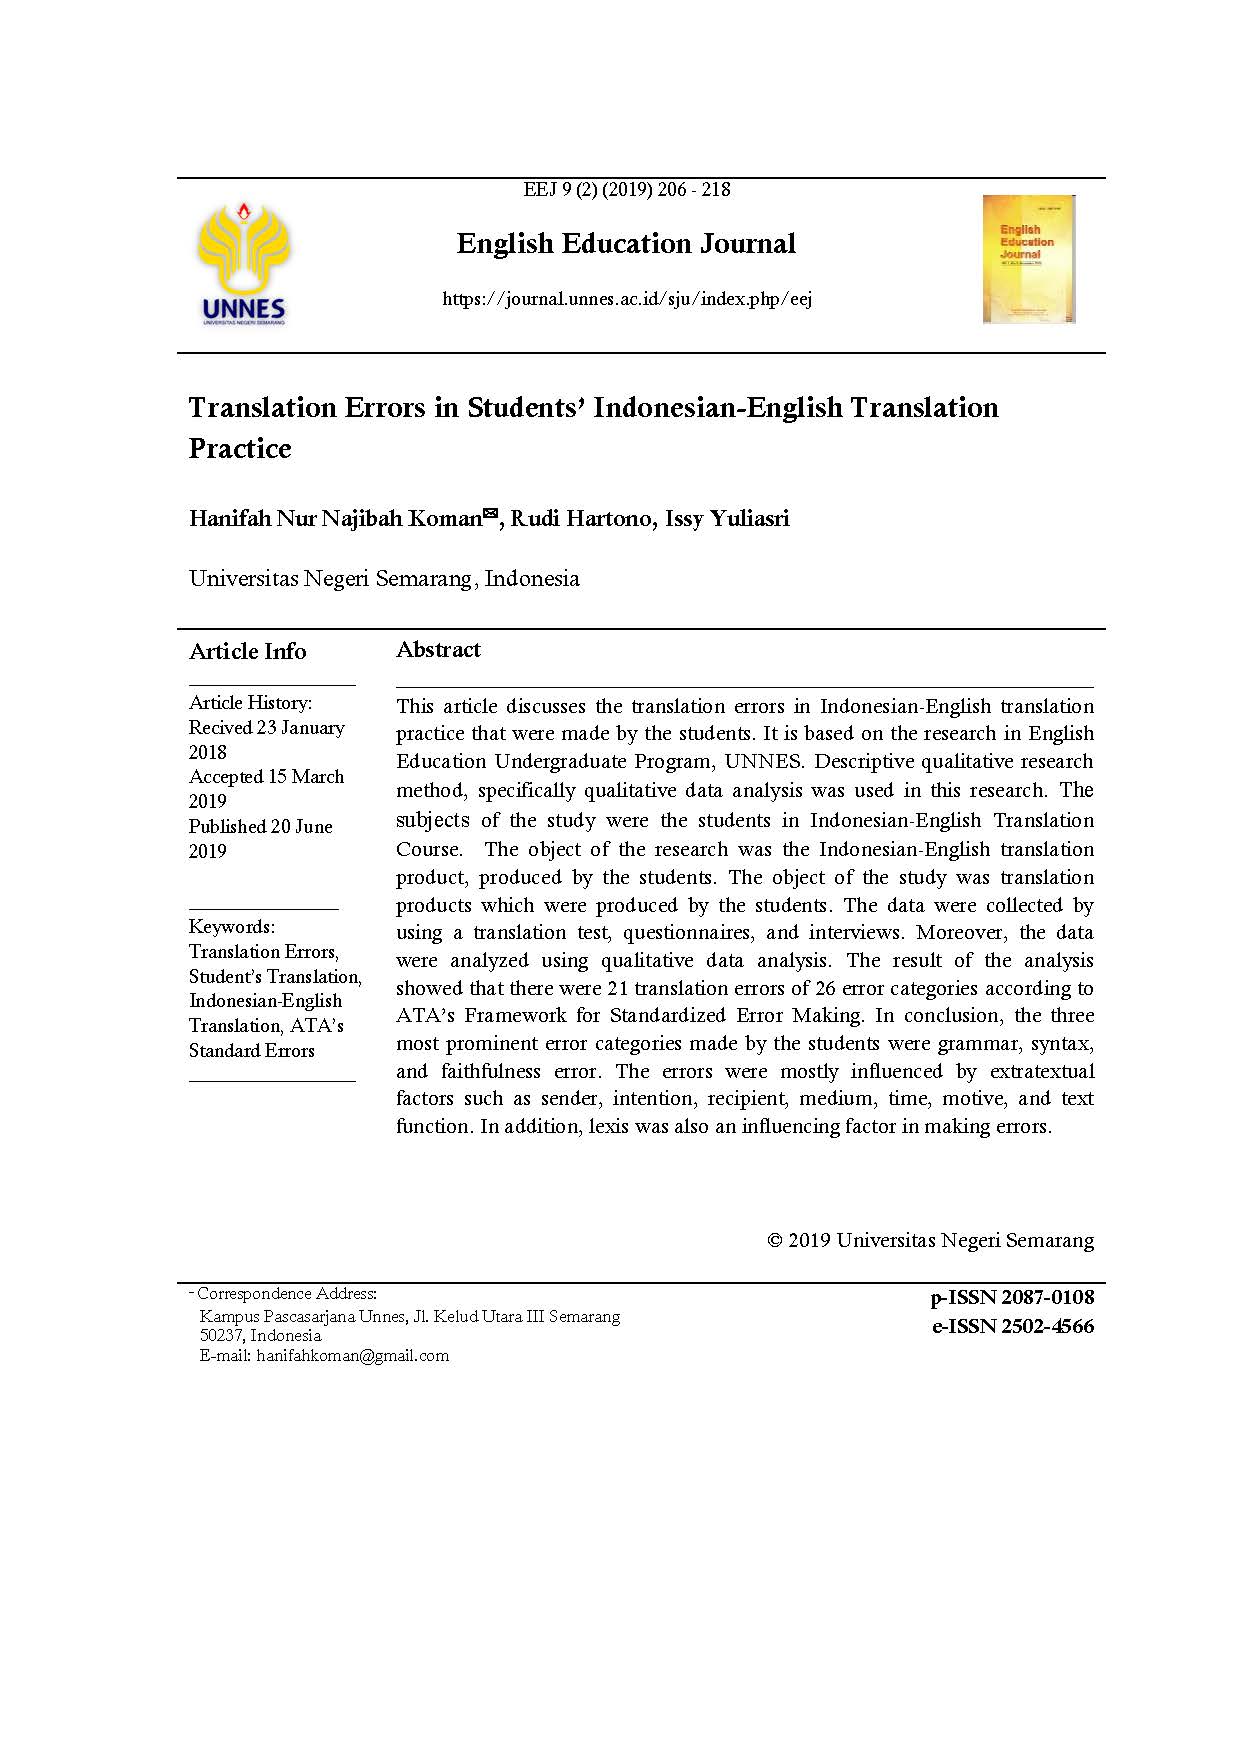 Translation Errors in Students Indonesian English Translation Practice